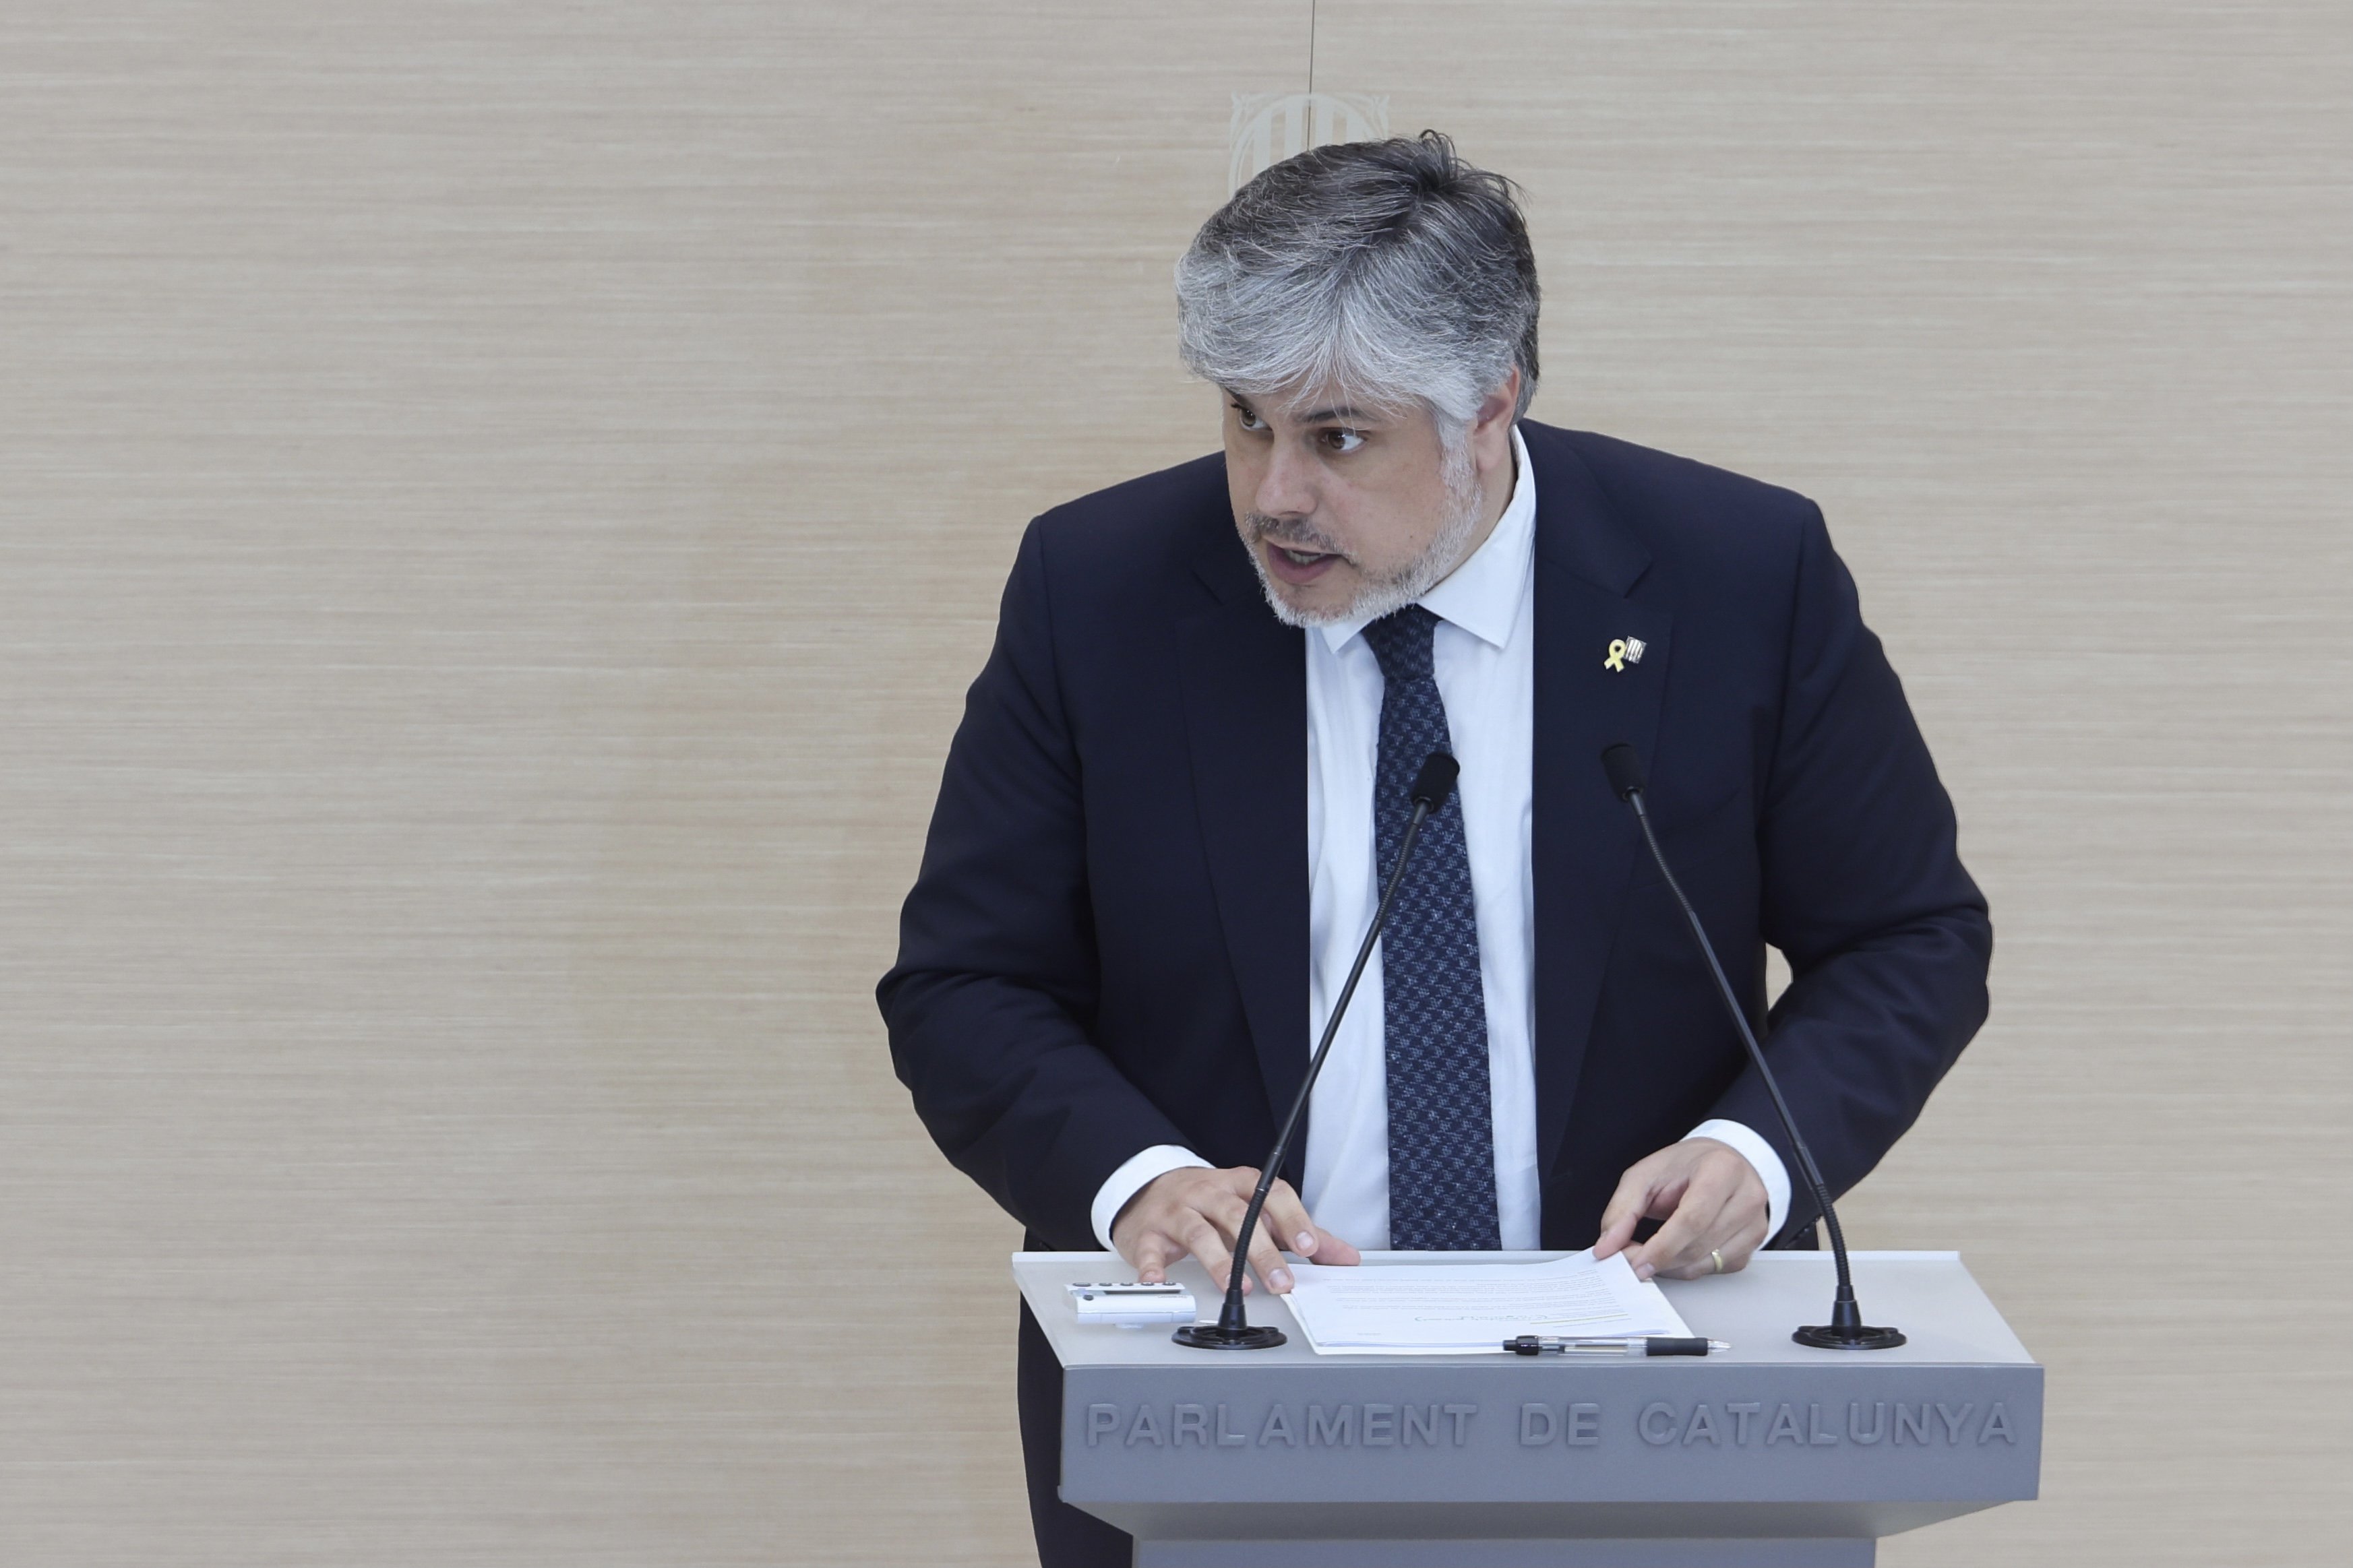 Albert Batet interviene en el debate de investidura Aragonès / Sergi Alcàzar